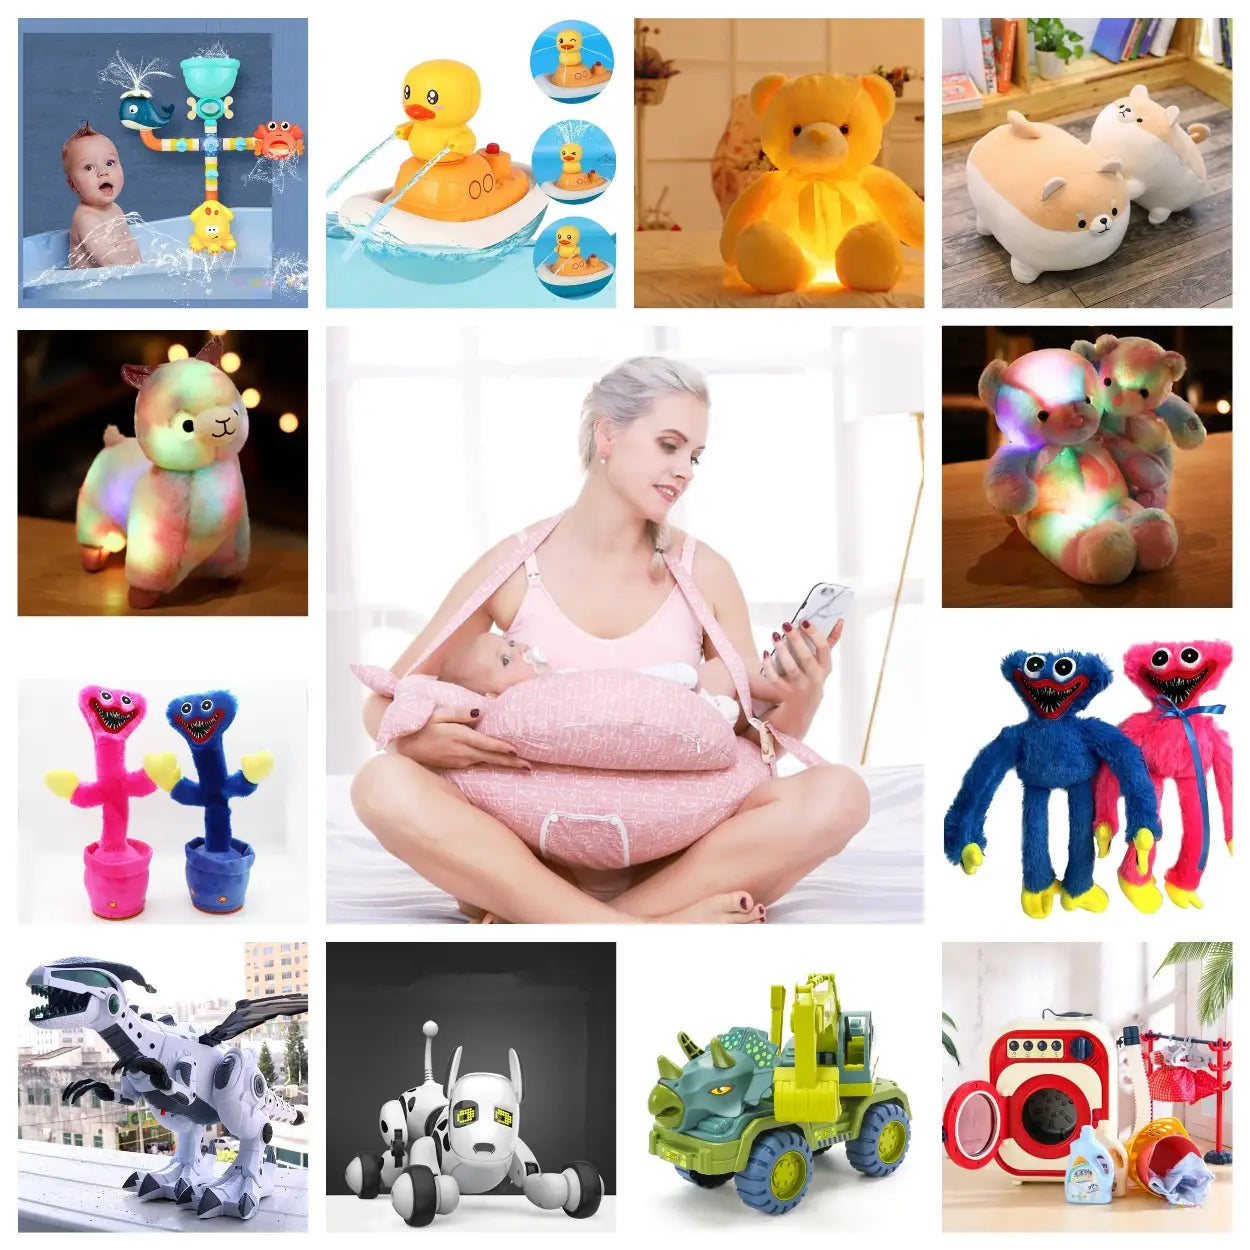 o. Toys & accessories for small children